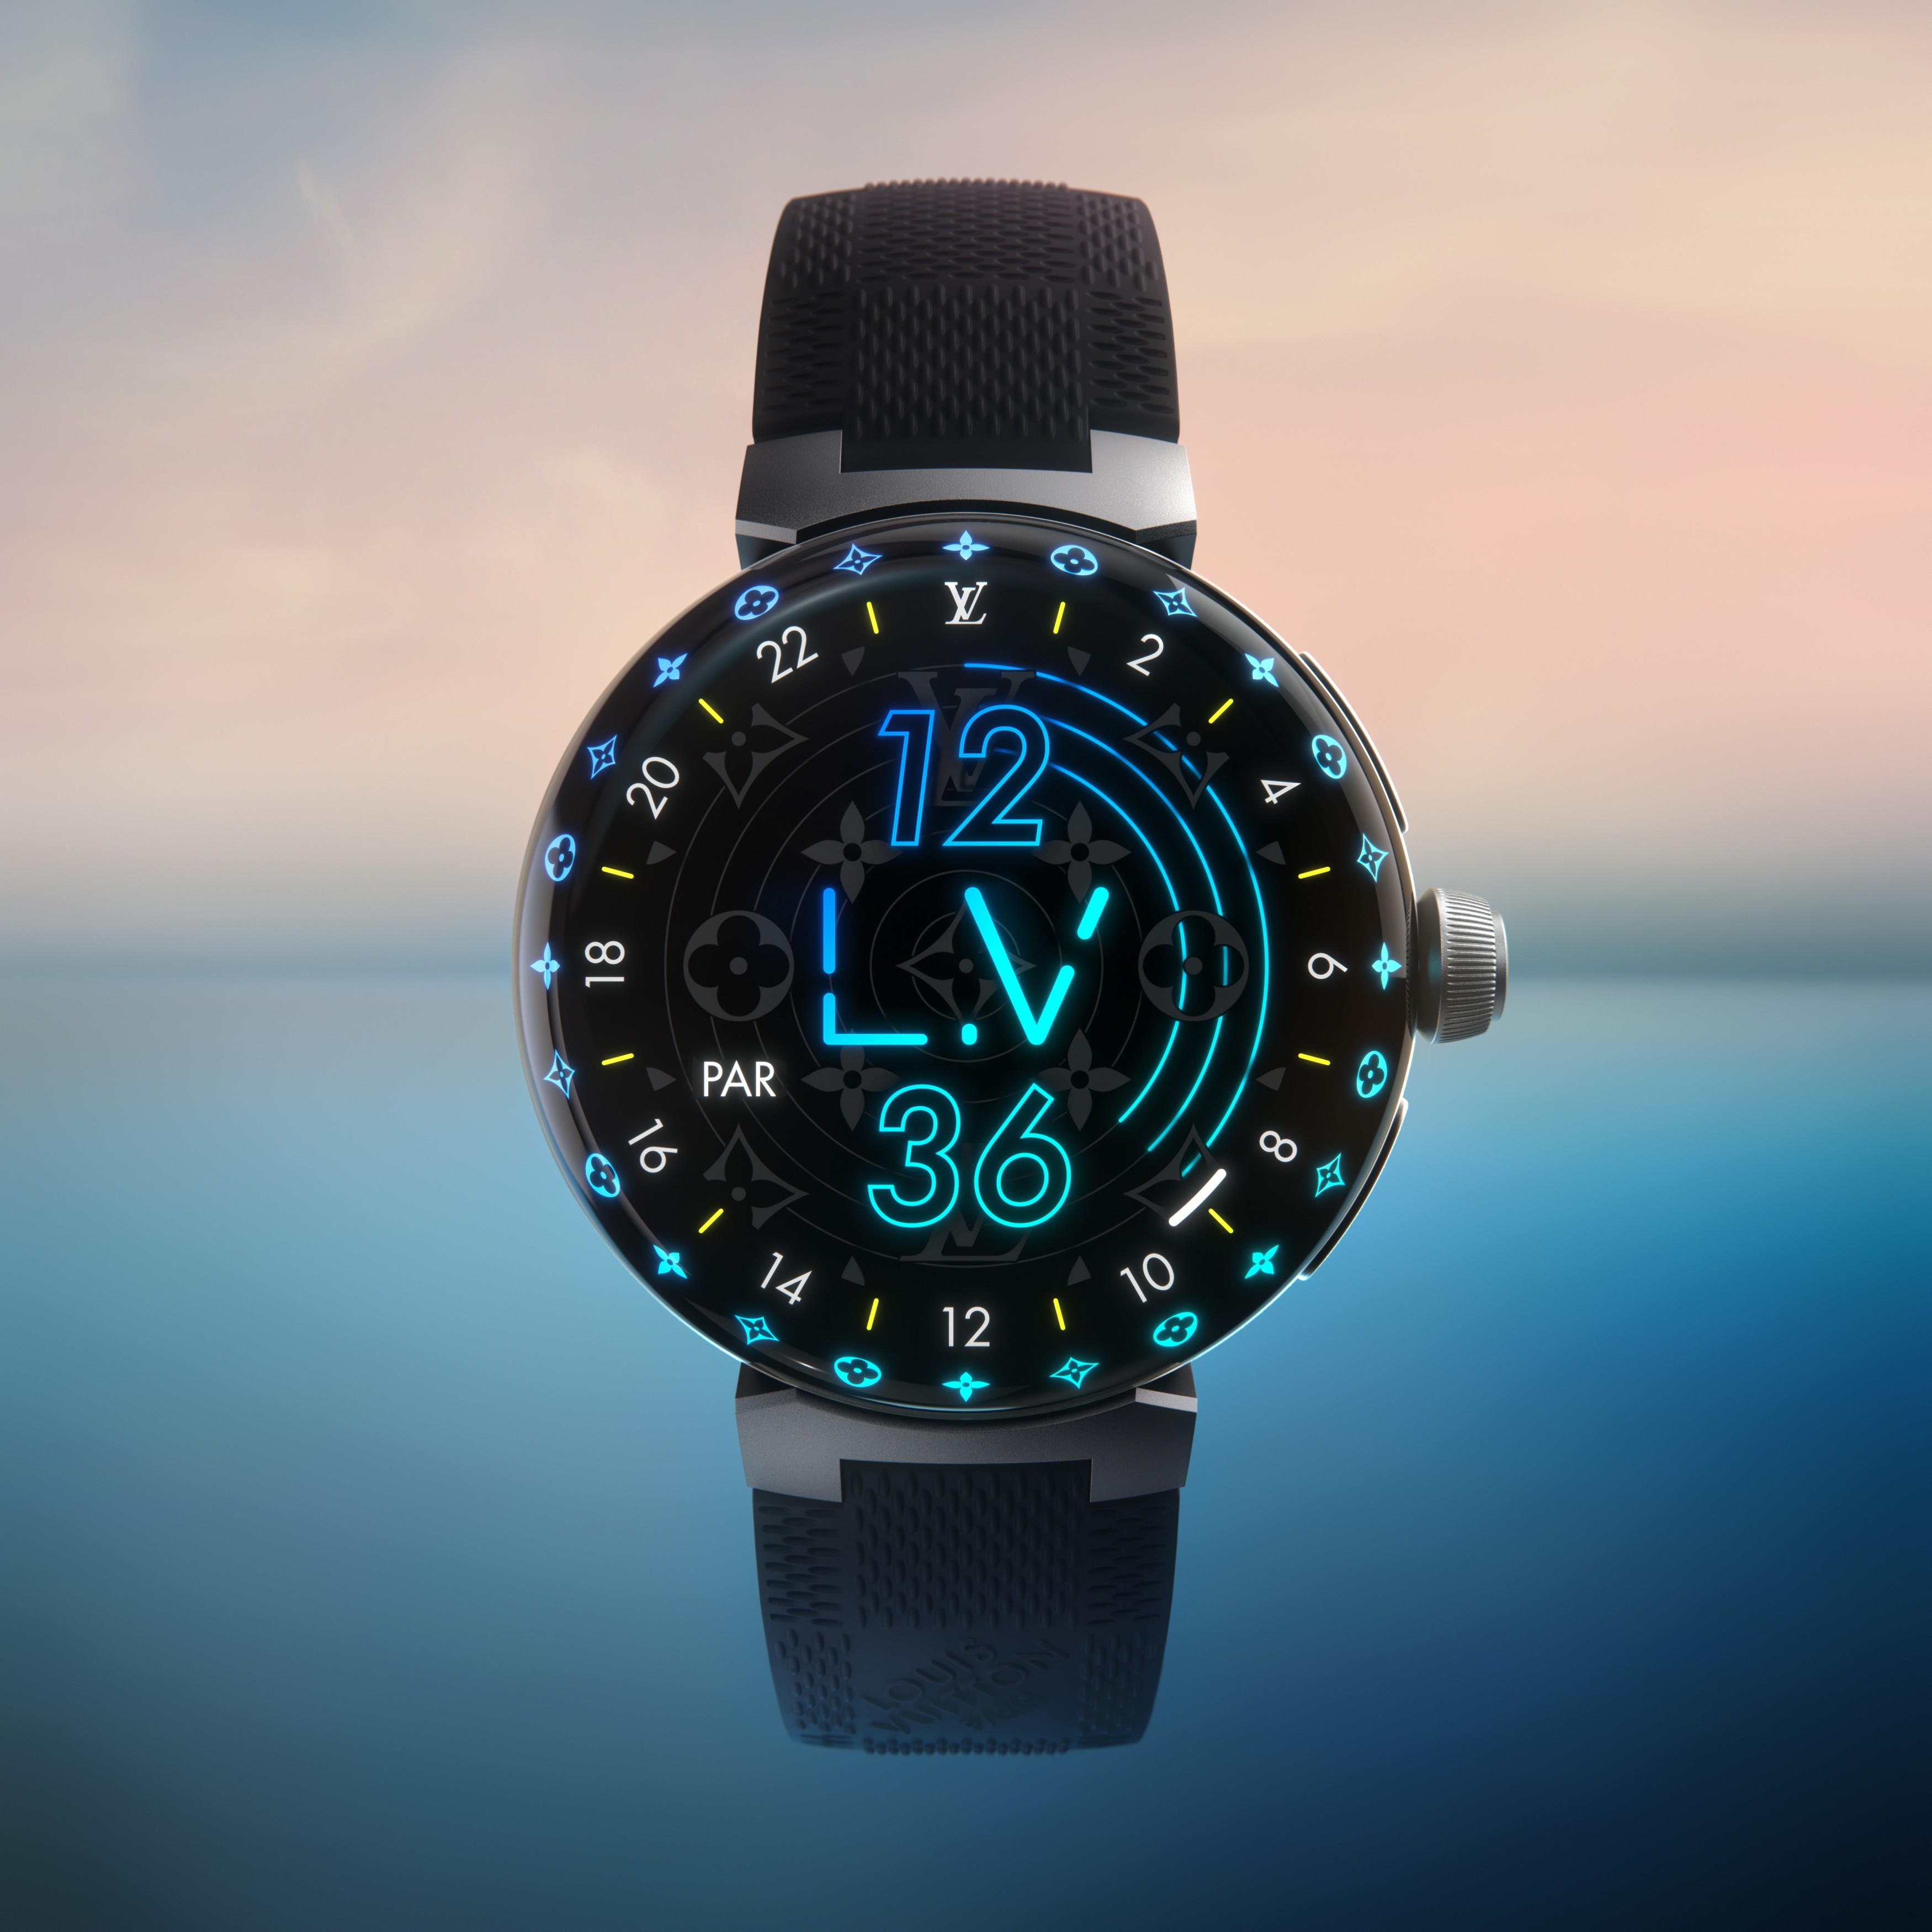 Louis Vuitton Tambour Horizon Light Up Connected Watch, Black, One Size